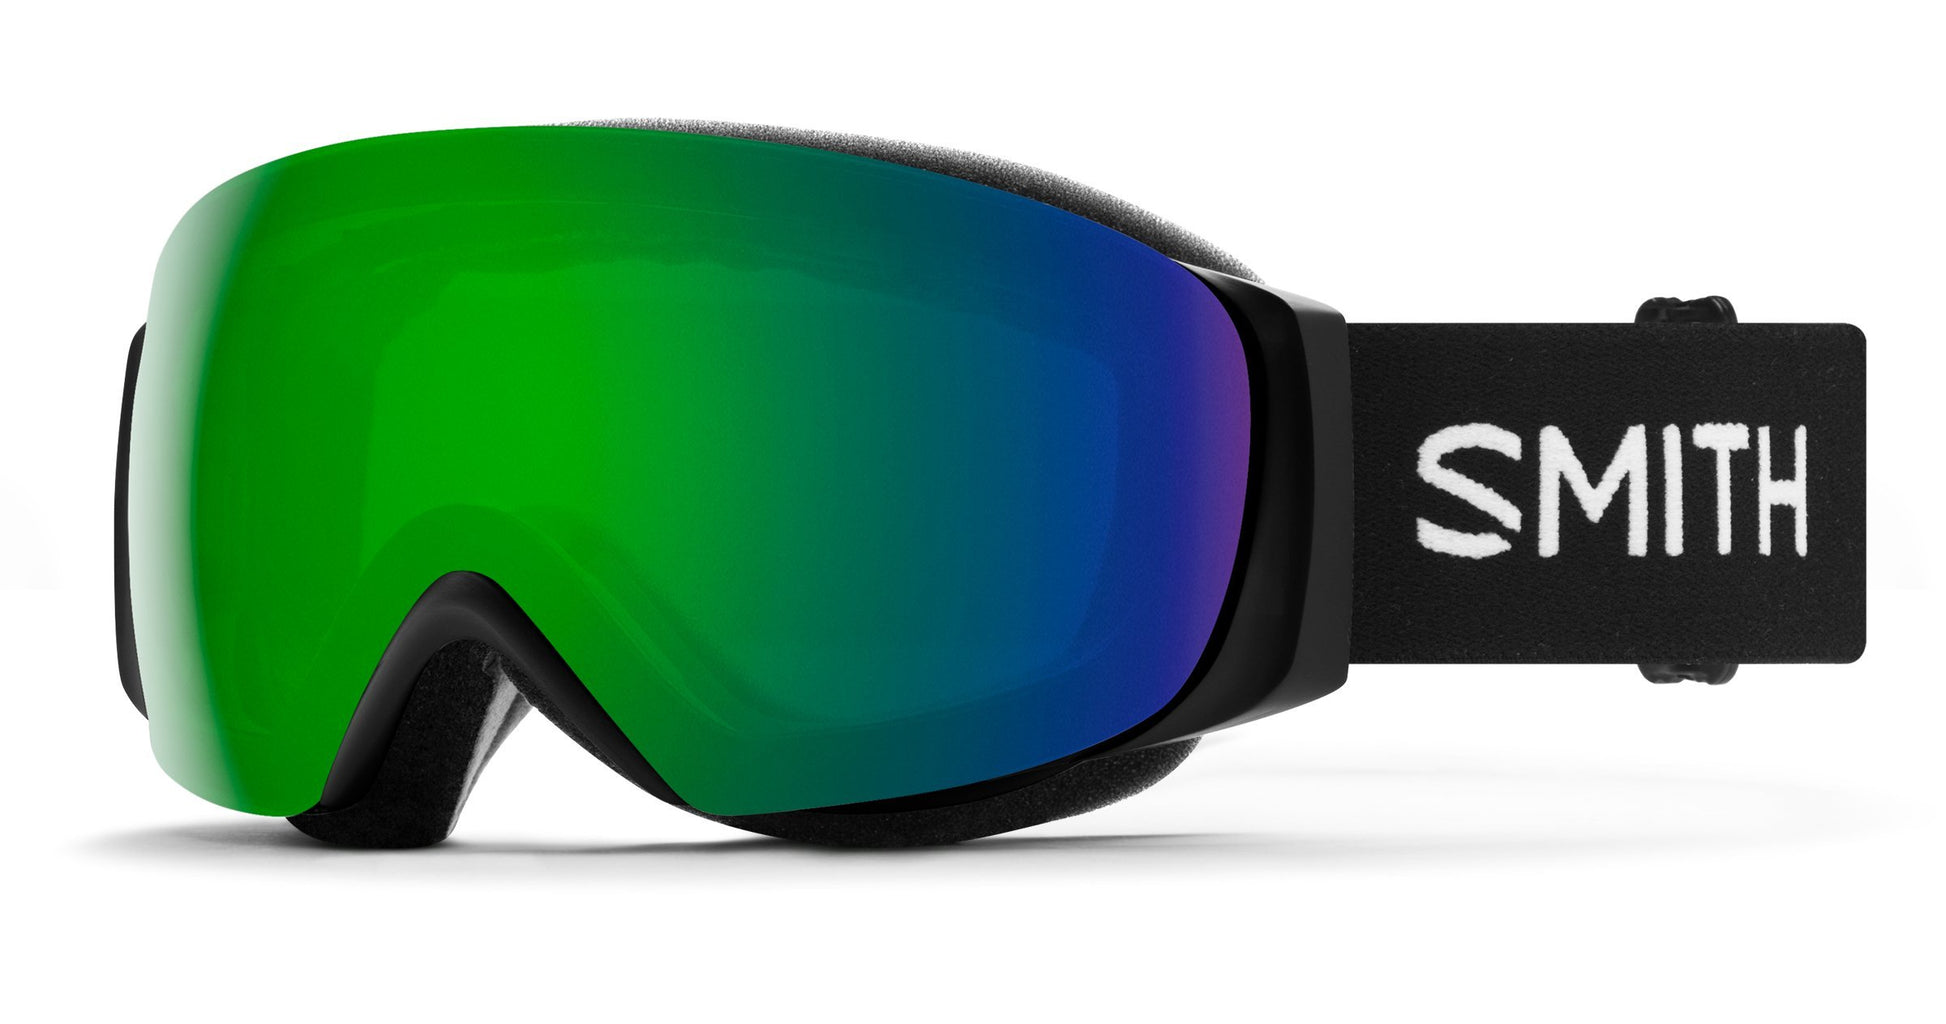 Smith I/O MAG S Goggles 2020